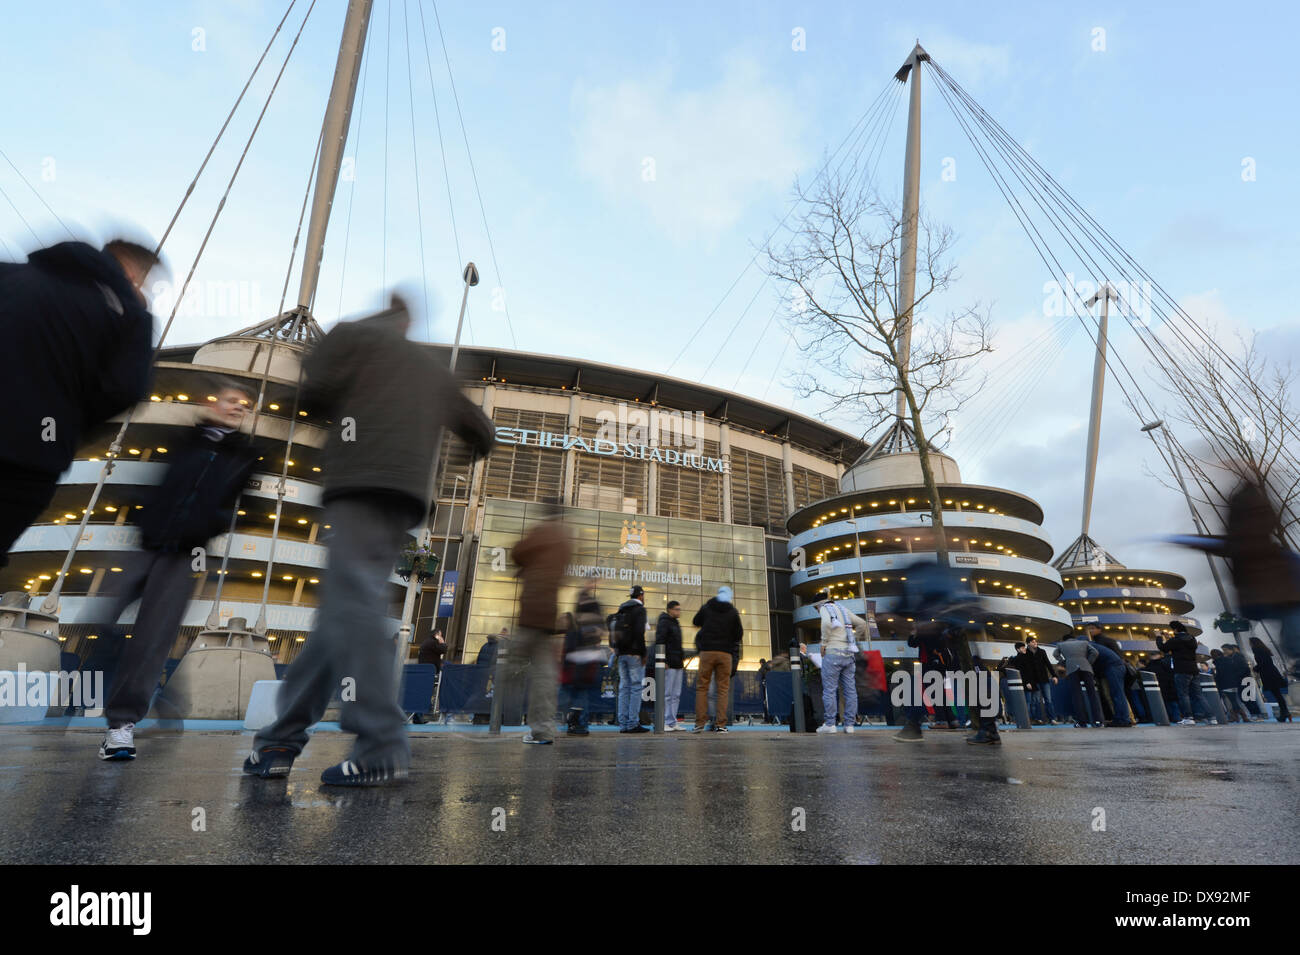 Una vista externa del Etihad Stadium, hogar del club de fútbol Manchester City (uso Editorial solamente). Foto de stock